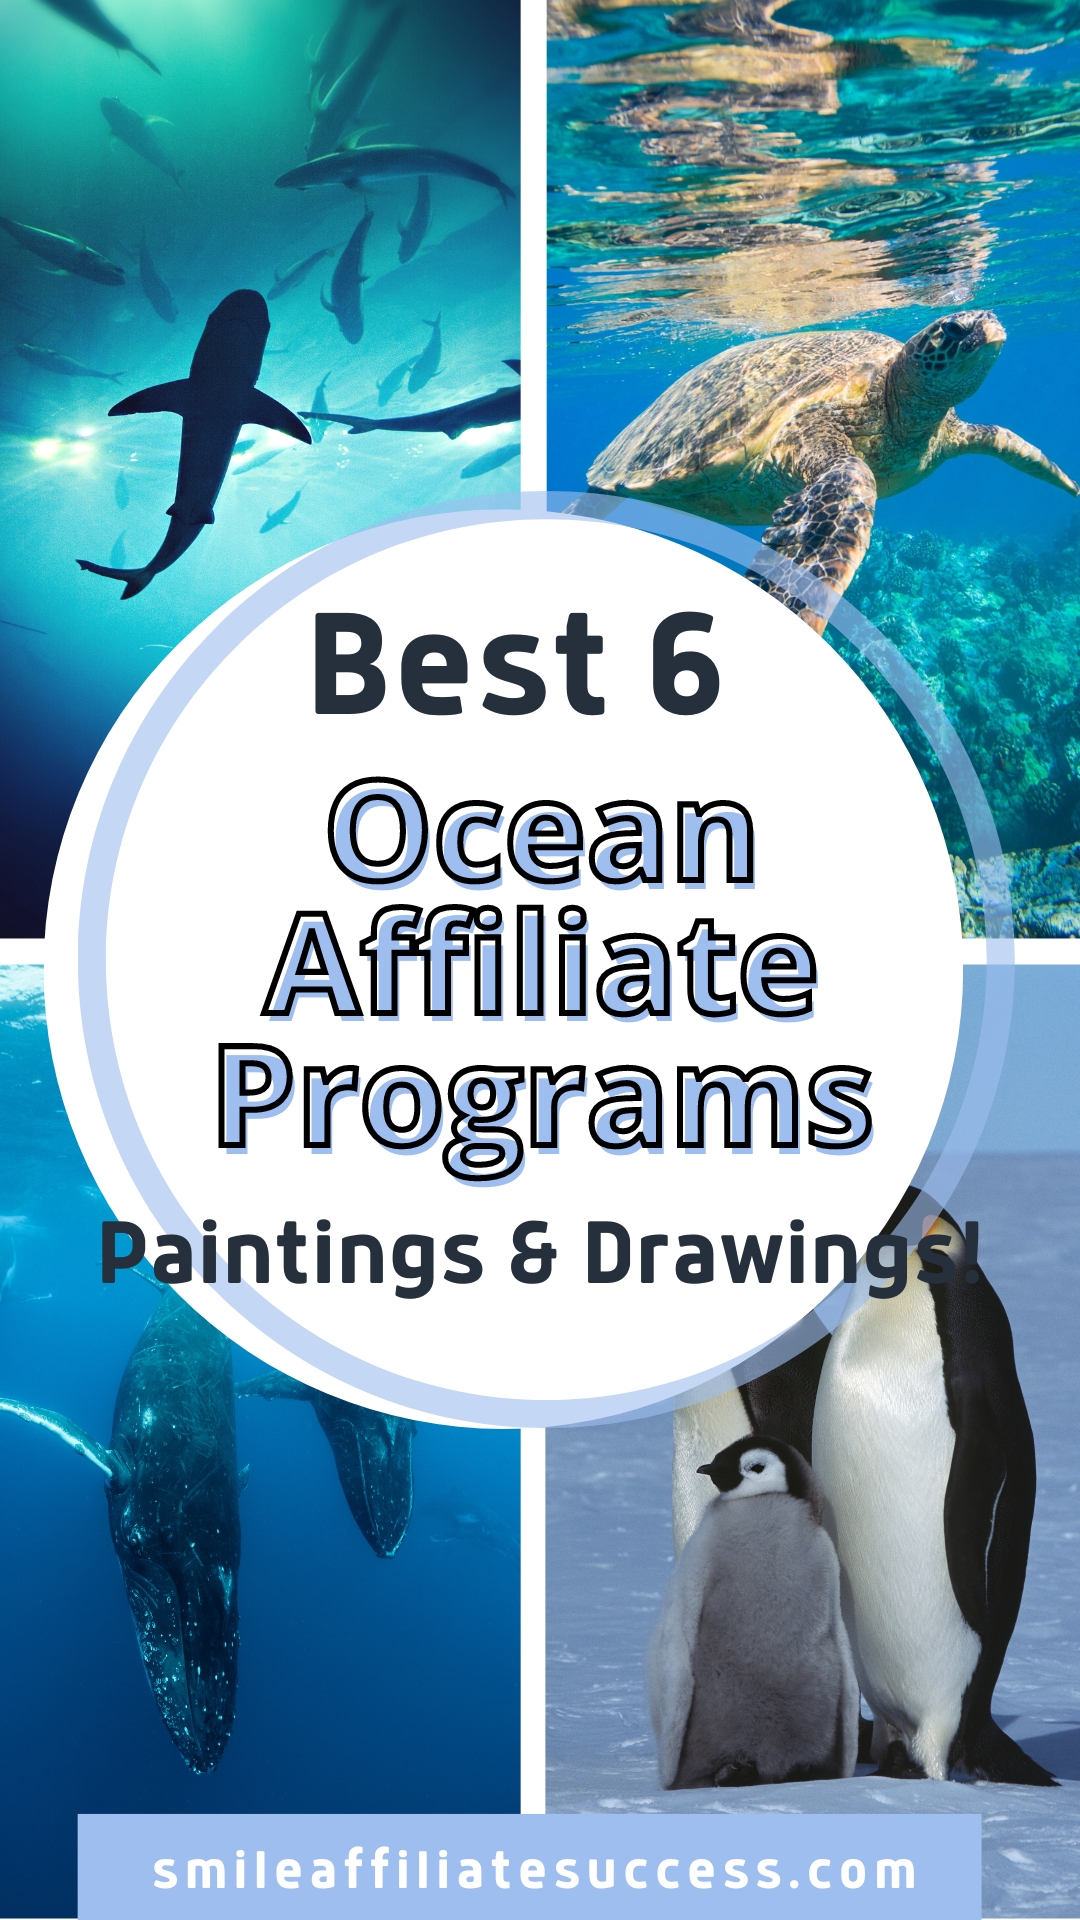 Best 6 Ocean Affiliate Programs